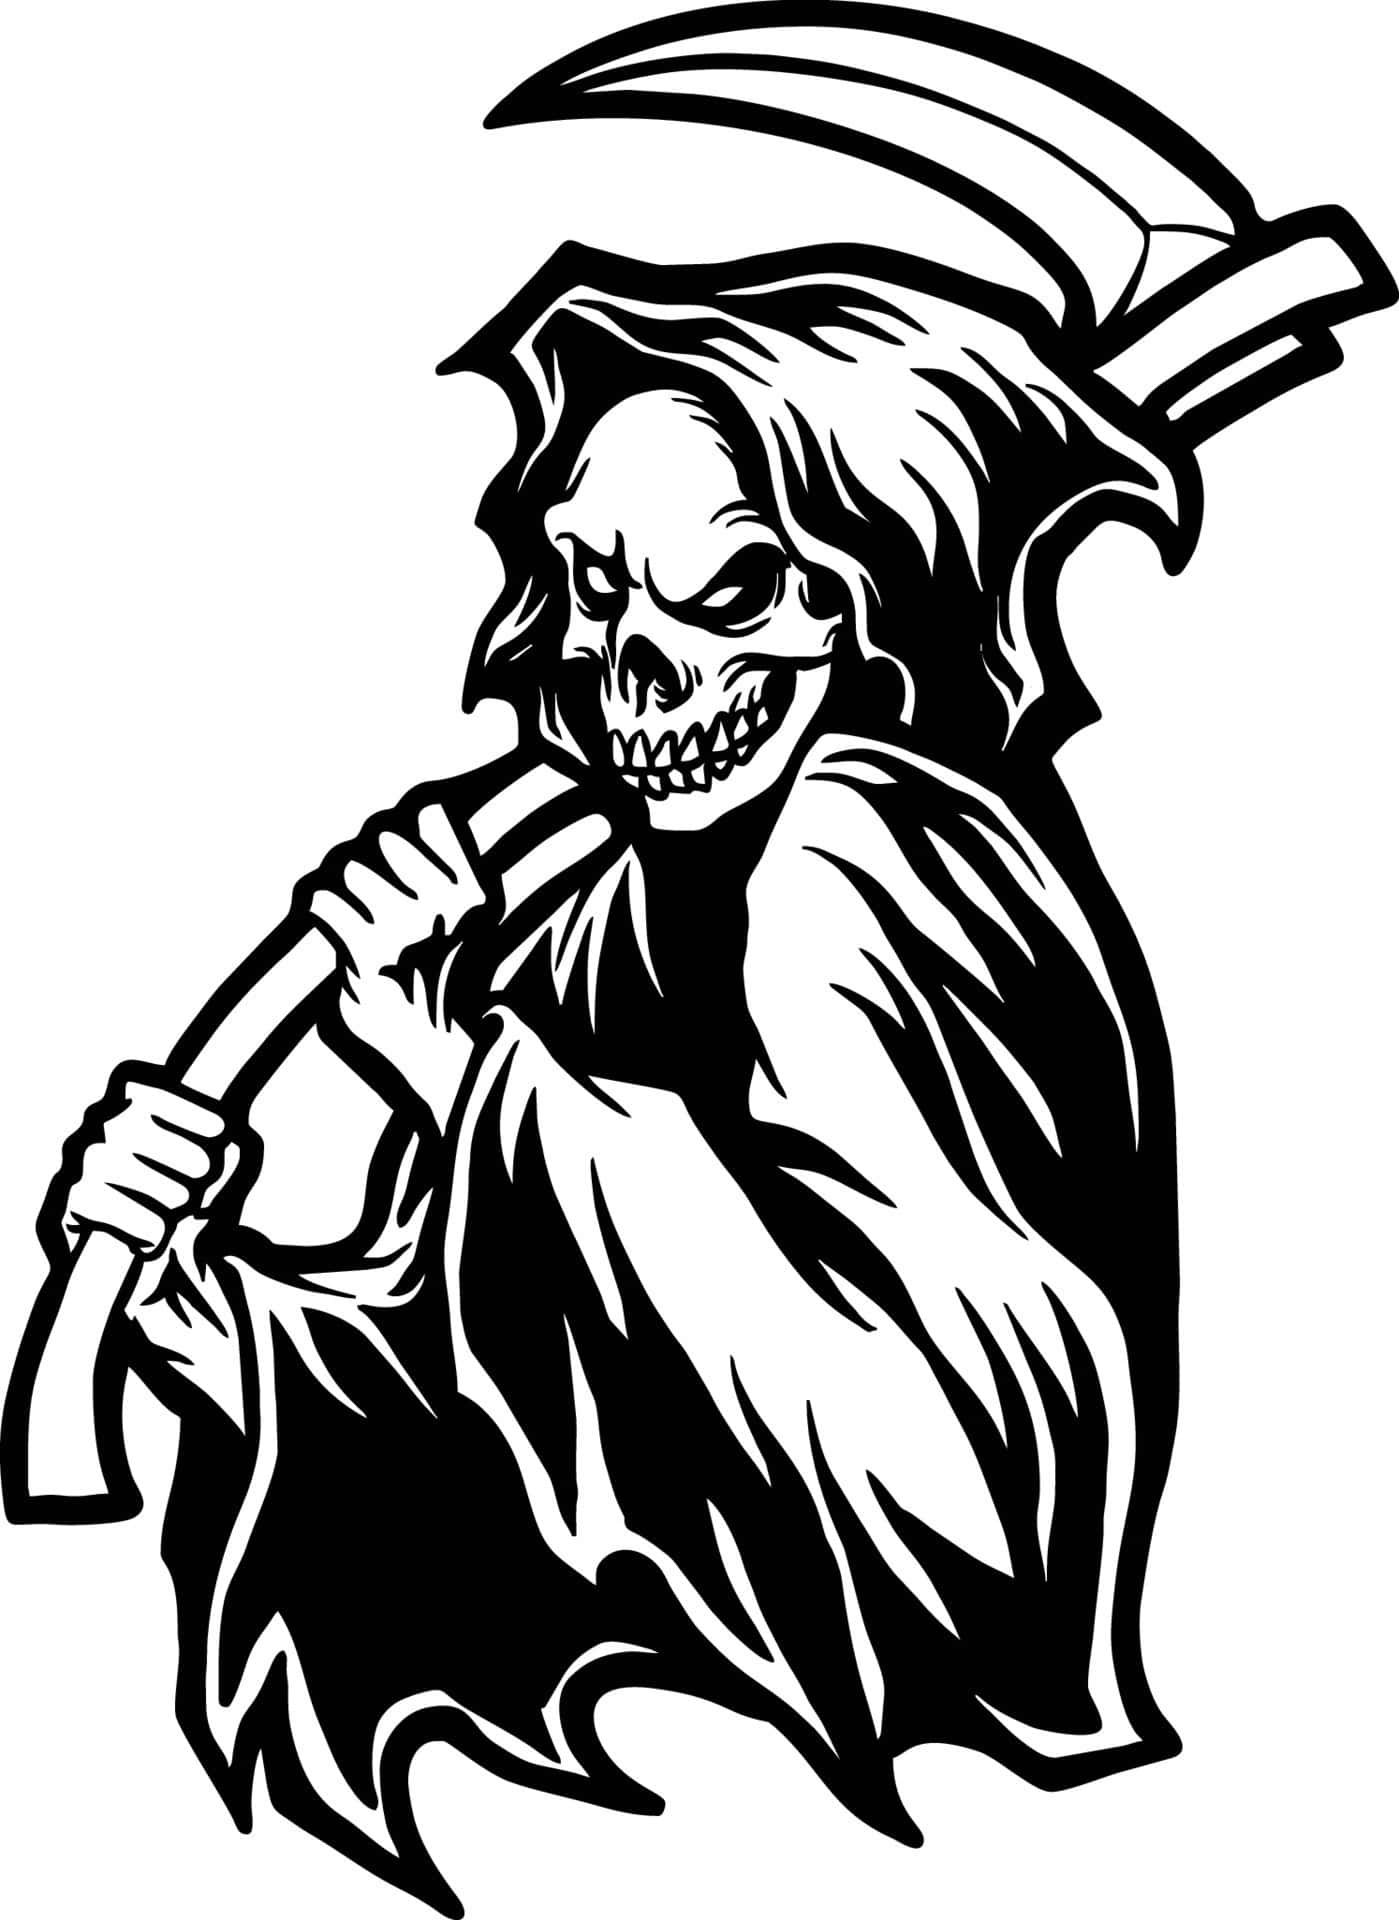 Foreboding Figure: The Grim Reaper In Dusk